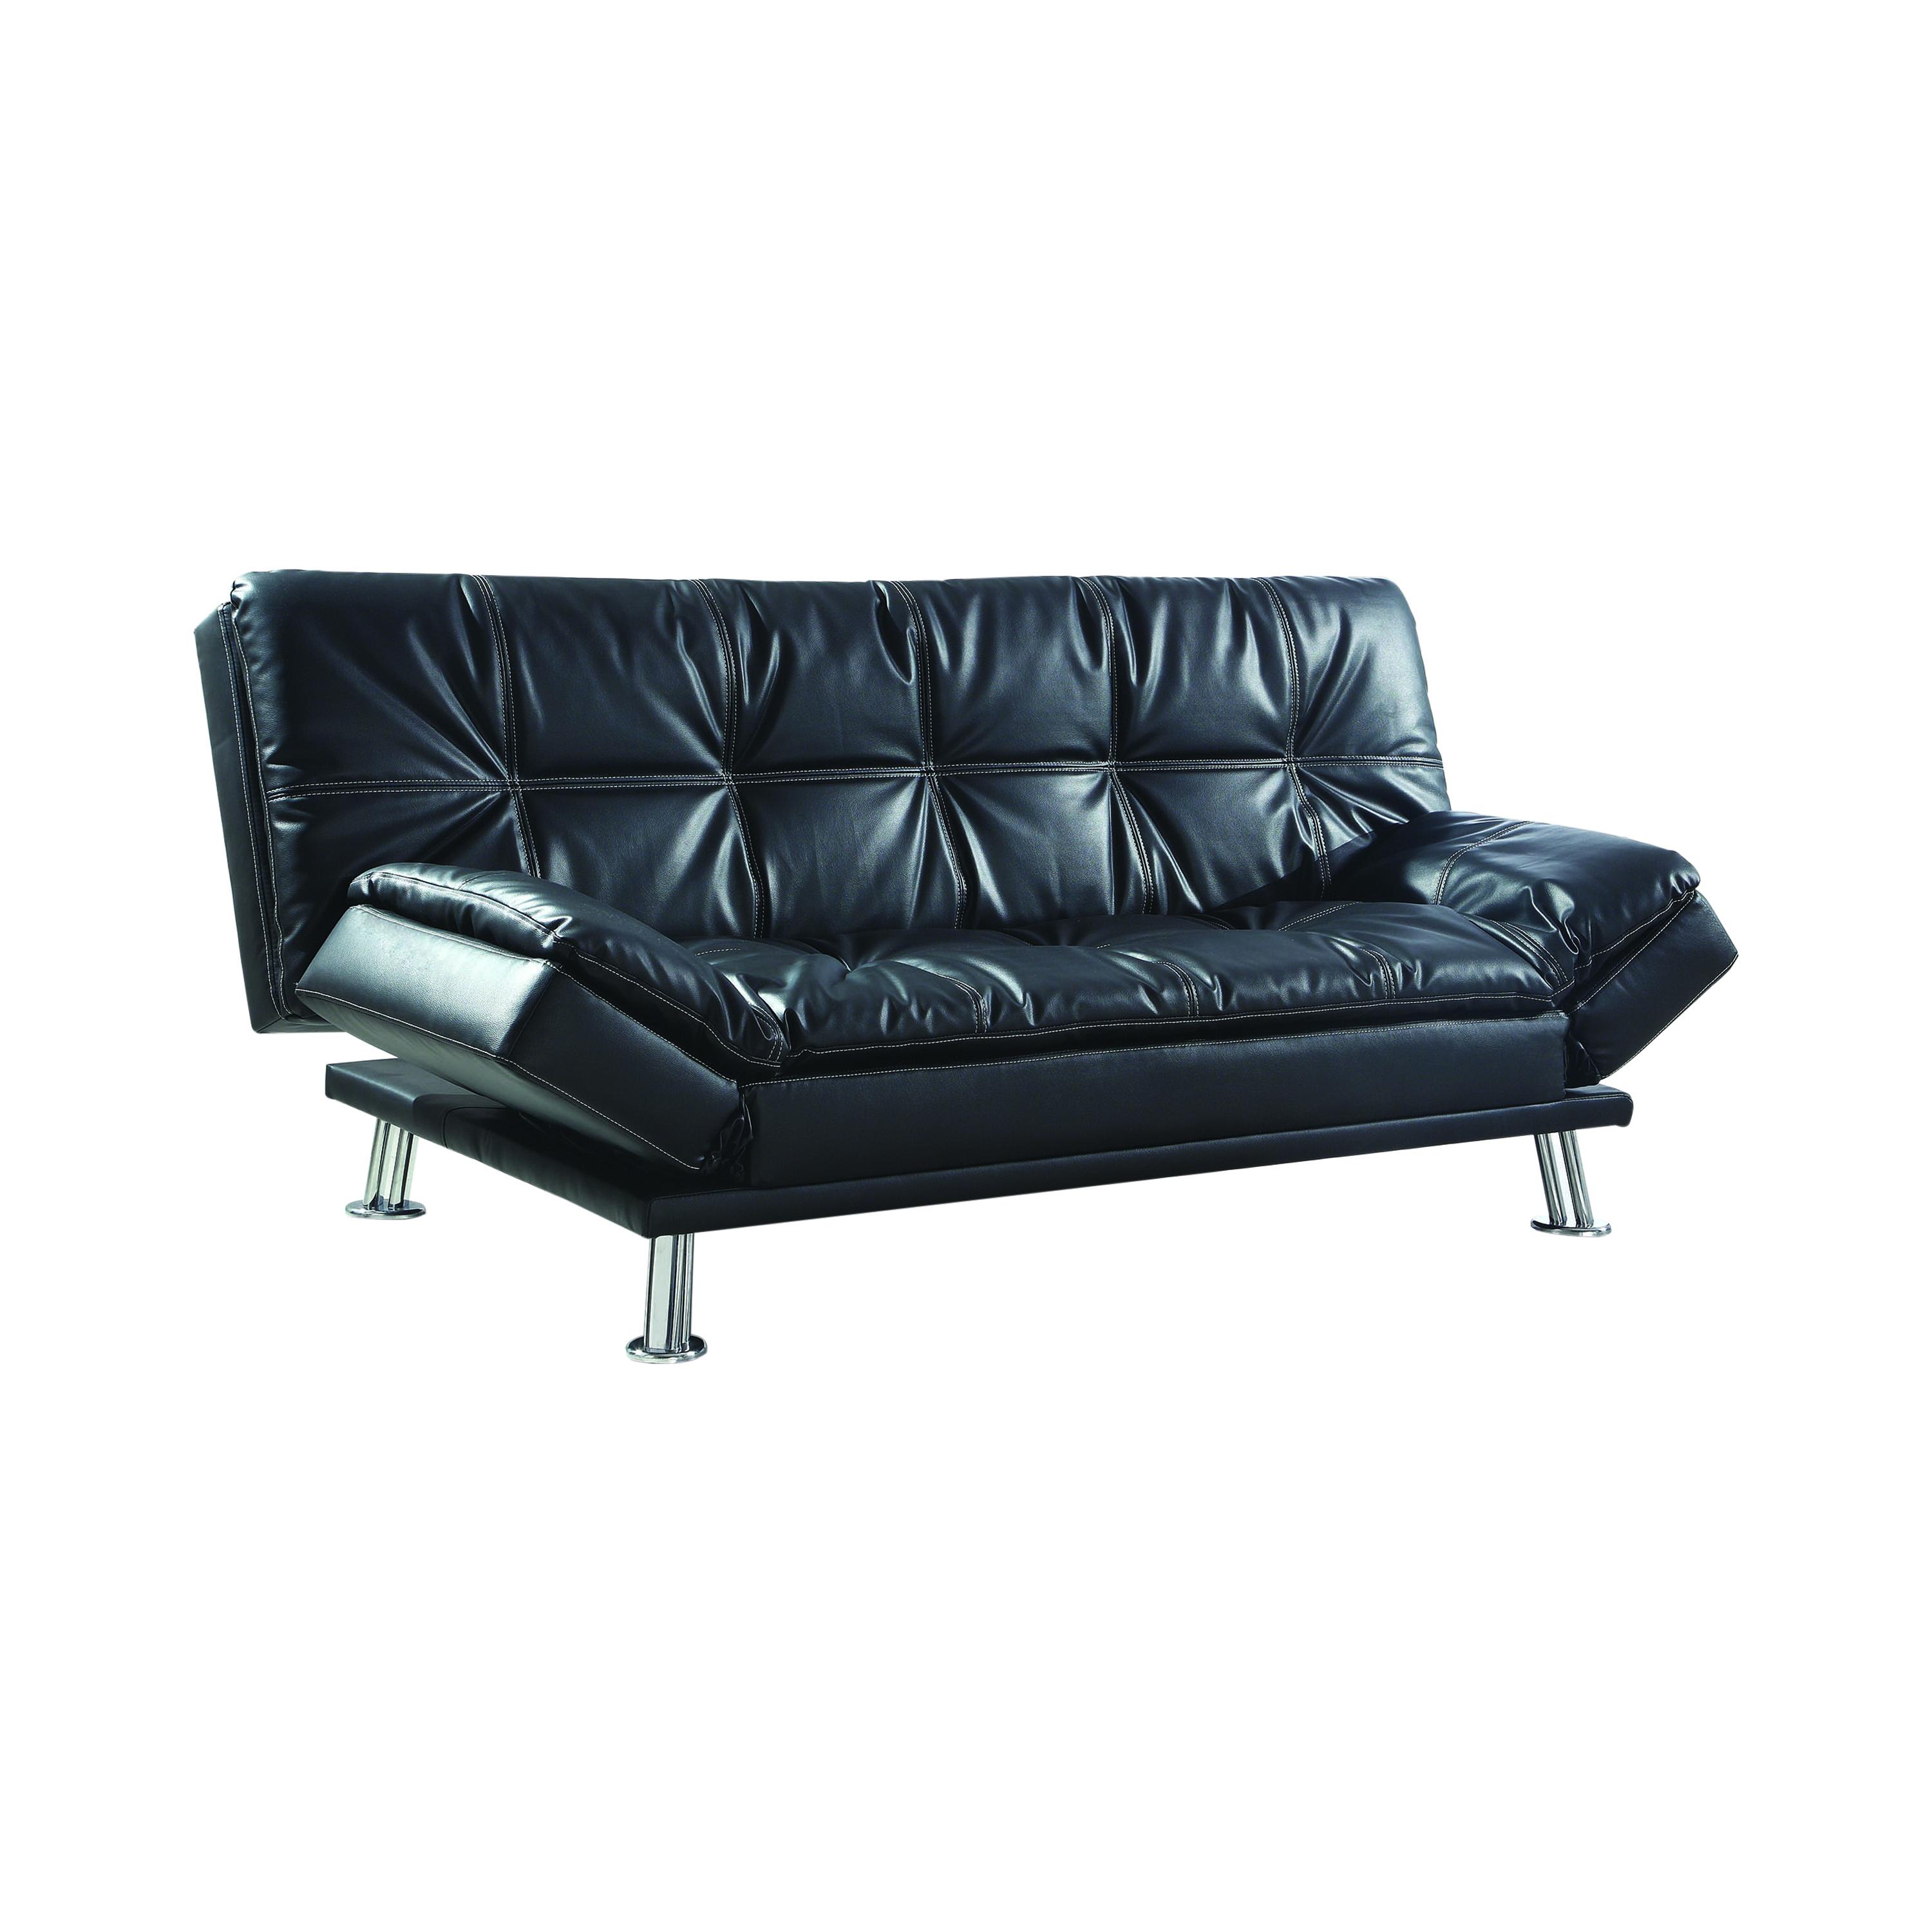 Modern Sofa bed 300281 Dilleston 300281 in Black Leatherette